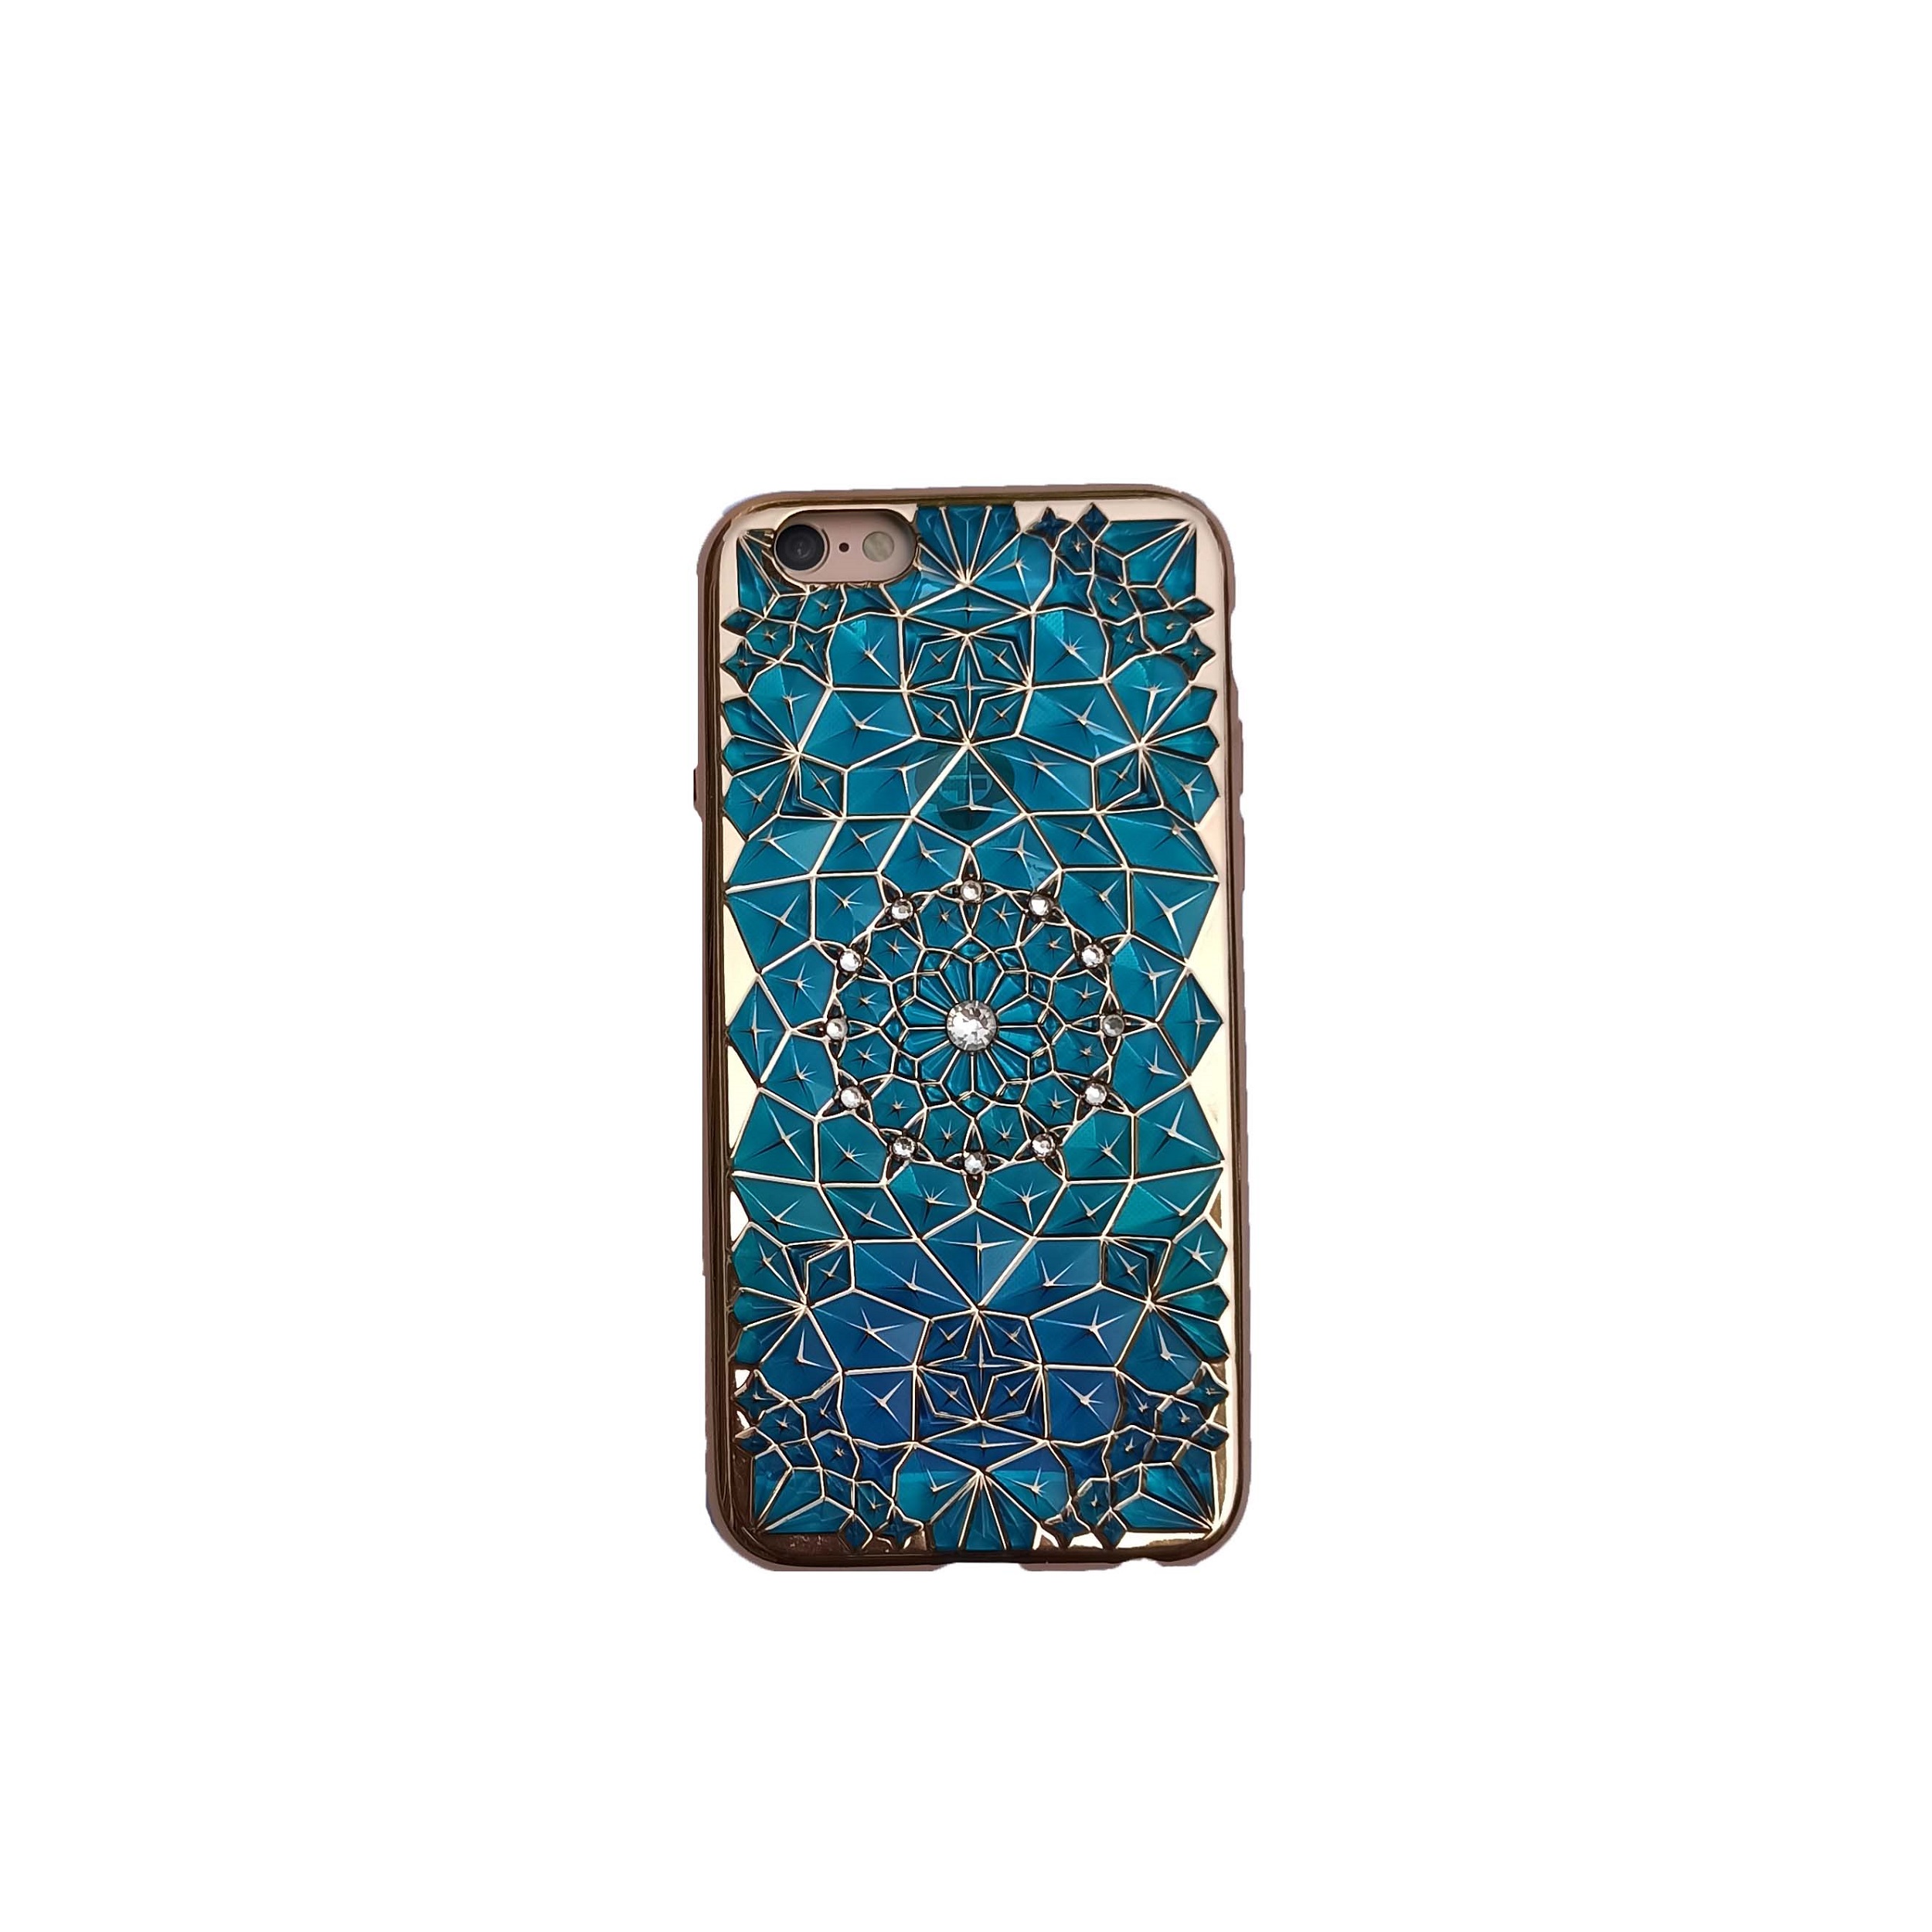 کاور توتو مدل Luxury03 مناسب برای گوشی موبایل اپل Iphone 6 / 6s